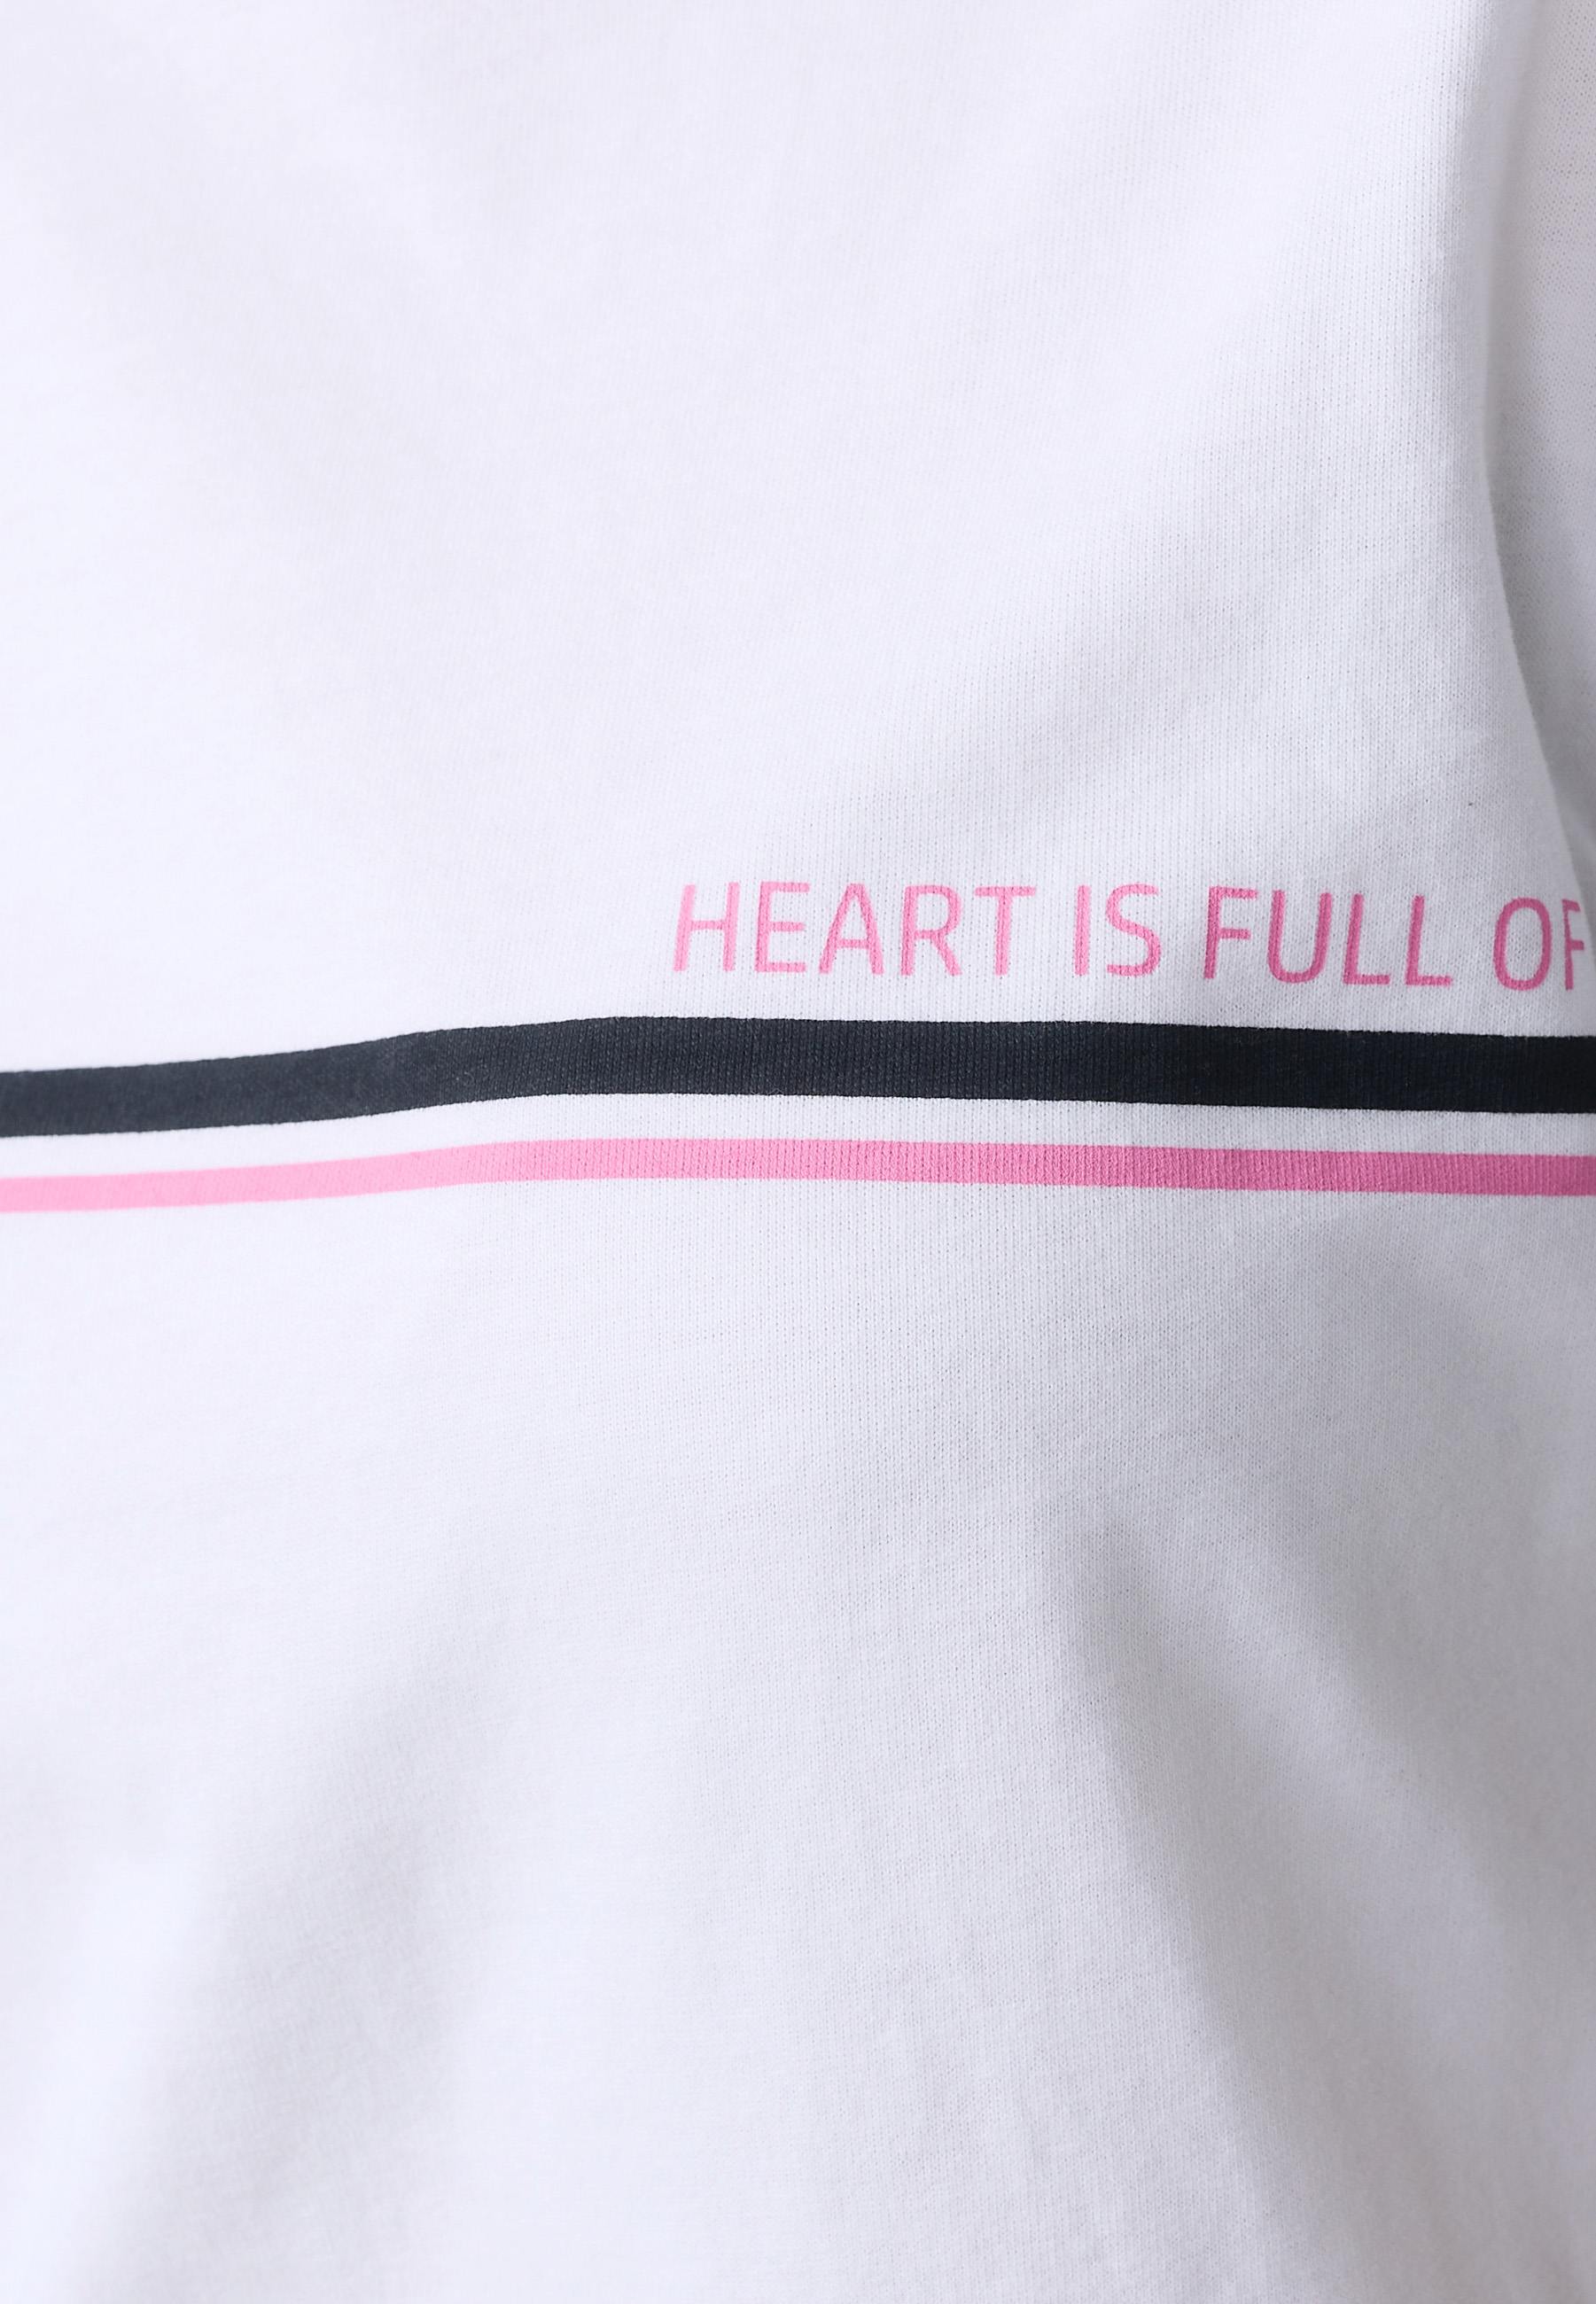 Soft T-Shirt Mit Heart Is Full Of Druck